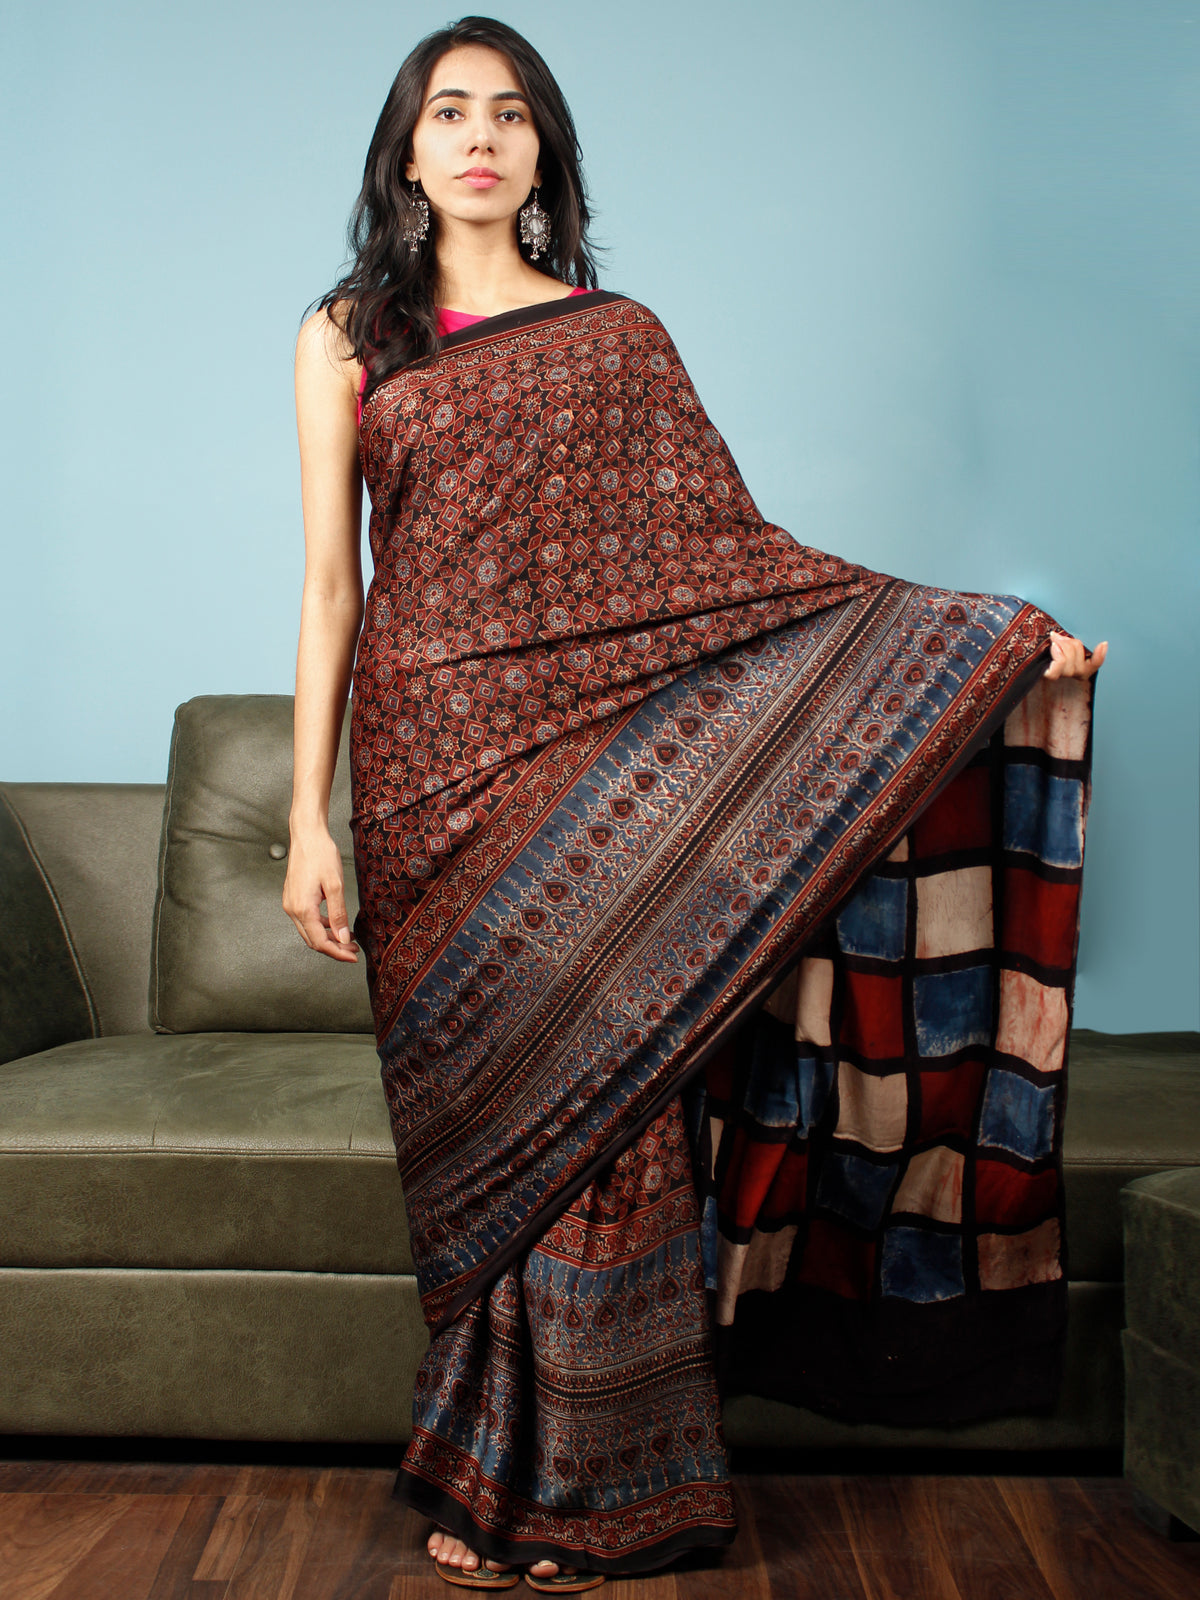 Black Maroon Beige Indigo Ajrakh Hand Block Printed Modal Silk Saree in Natural Colors - S031703346